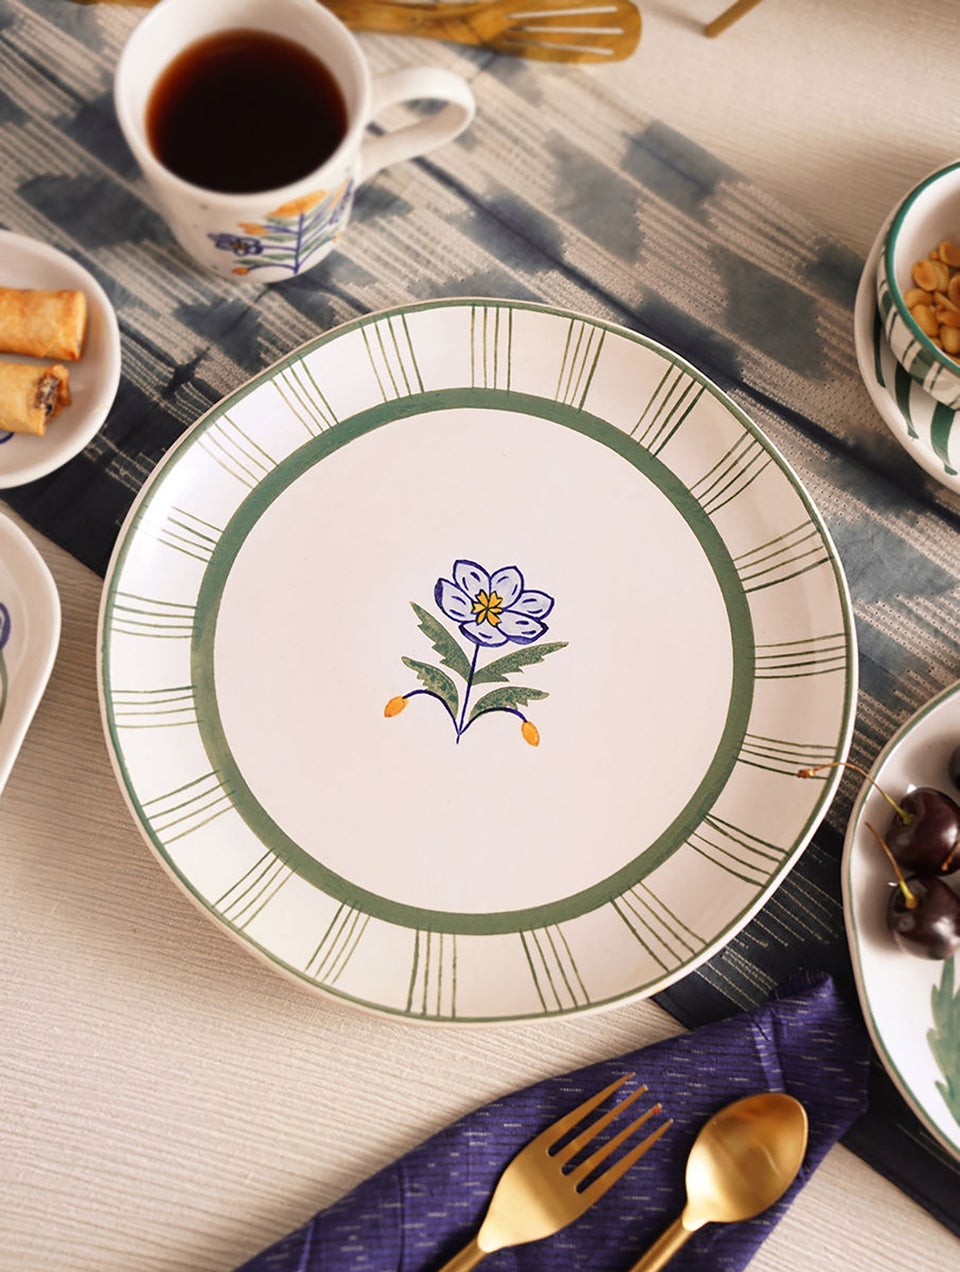 Handpainted Ceramic Dinner Plate